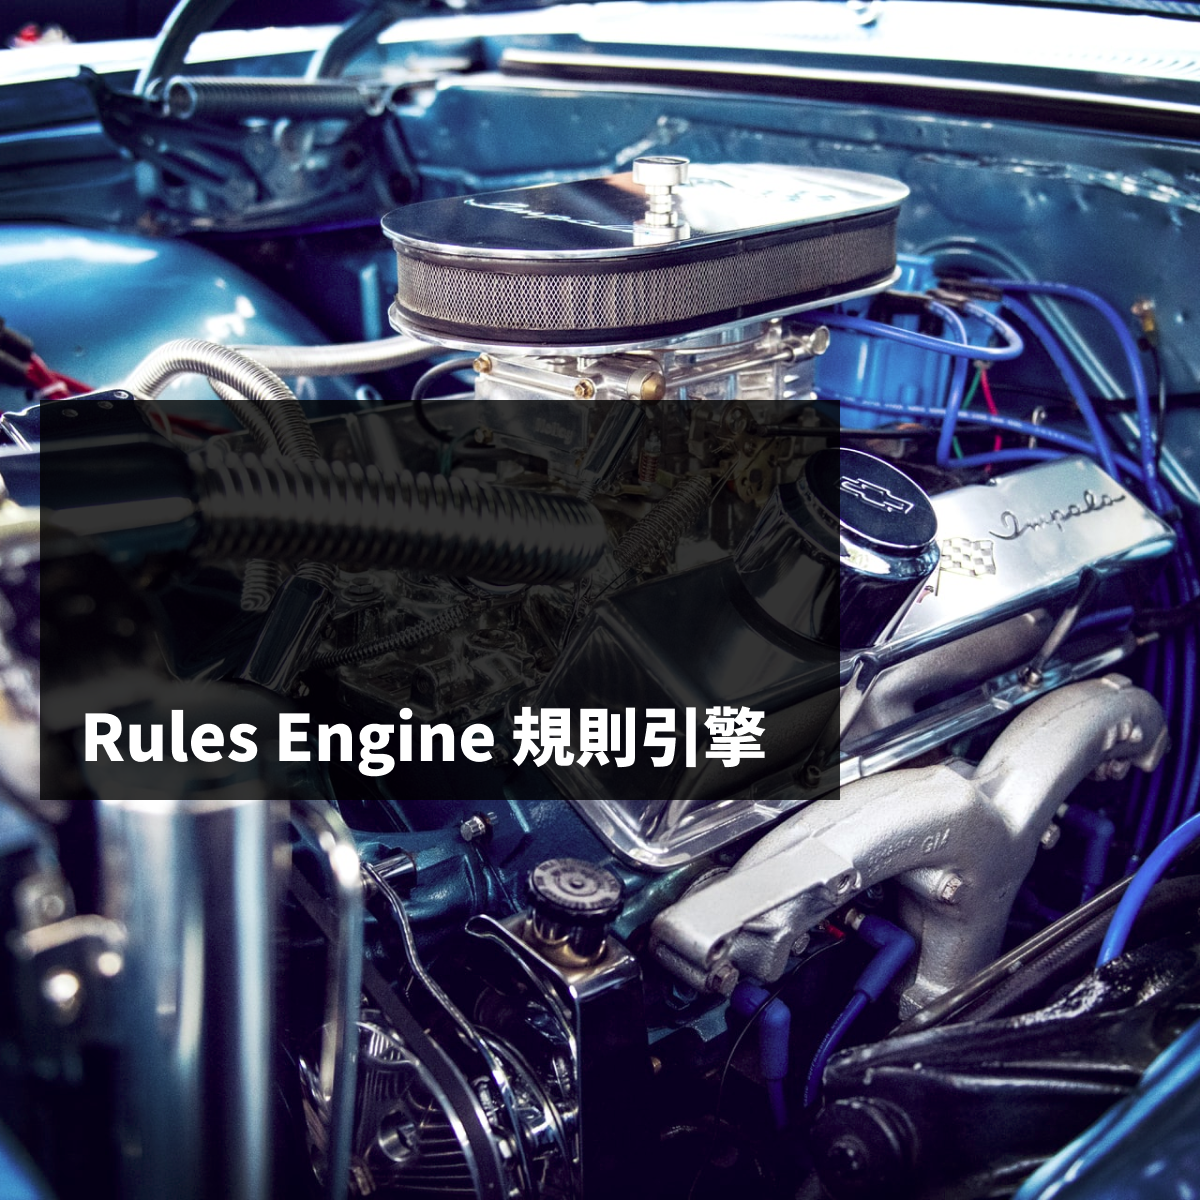 Rules Engine 規則引擎